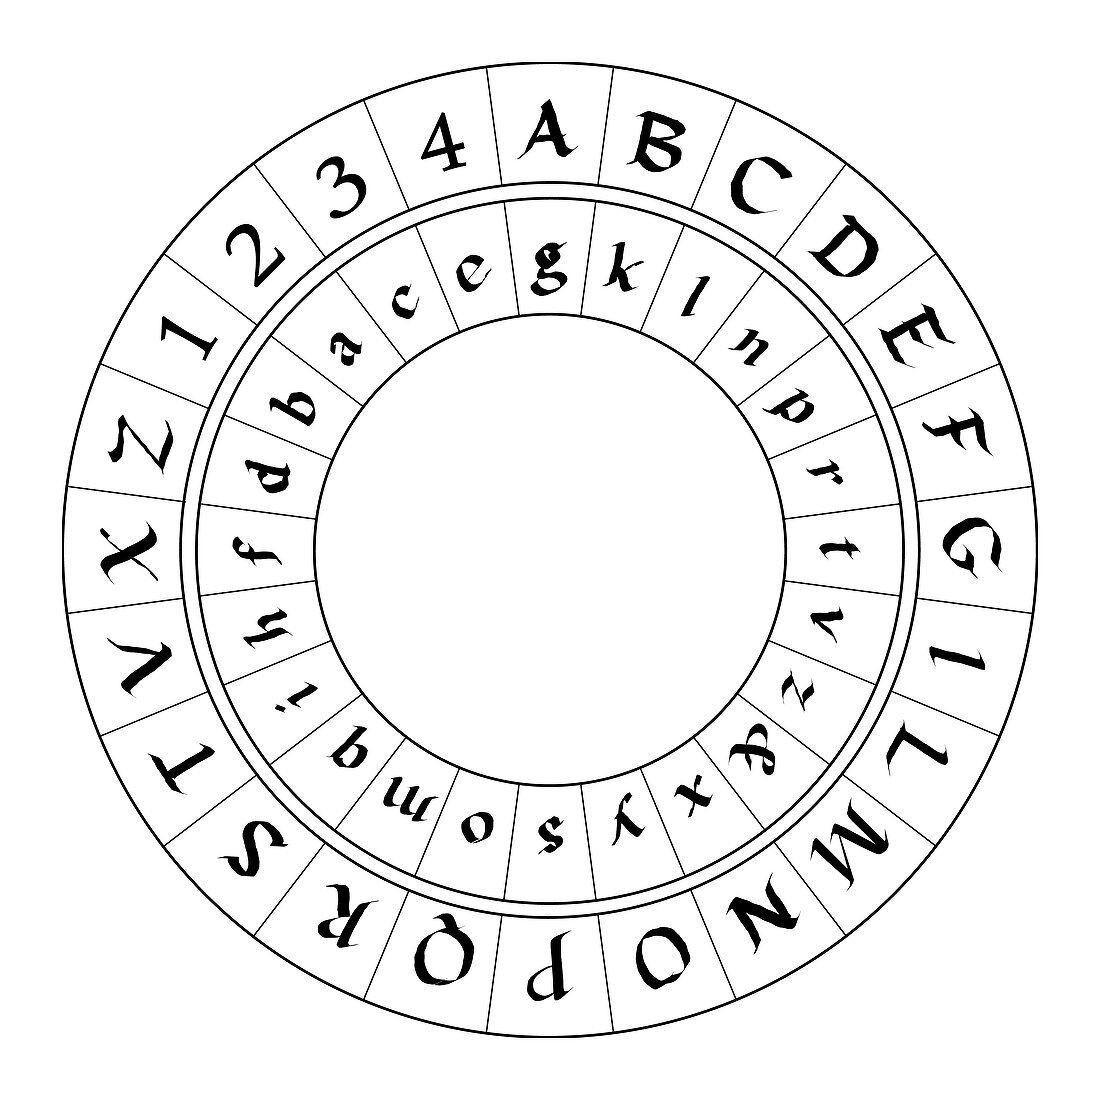 Alberti cipher disc,artwork